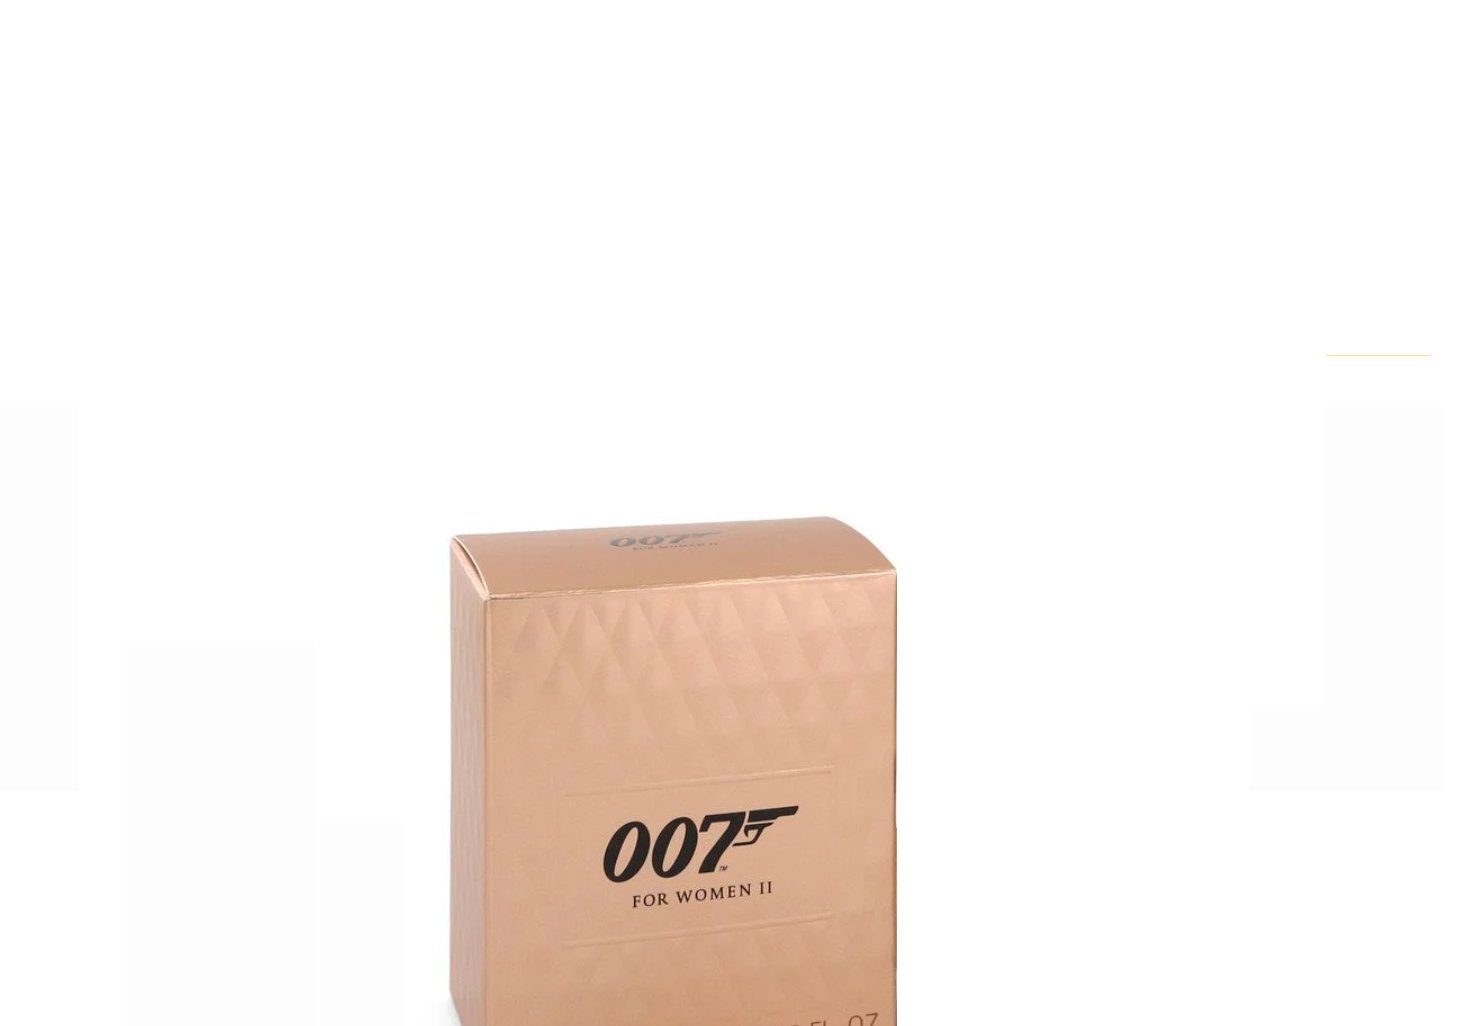 James Bond Eau de Eau Parfum Spray de 007 James 2 75ml for Bond Women Parfum EDP II